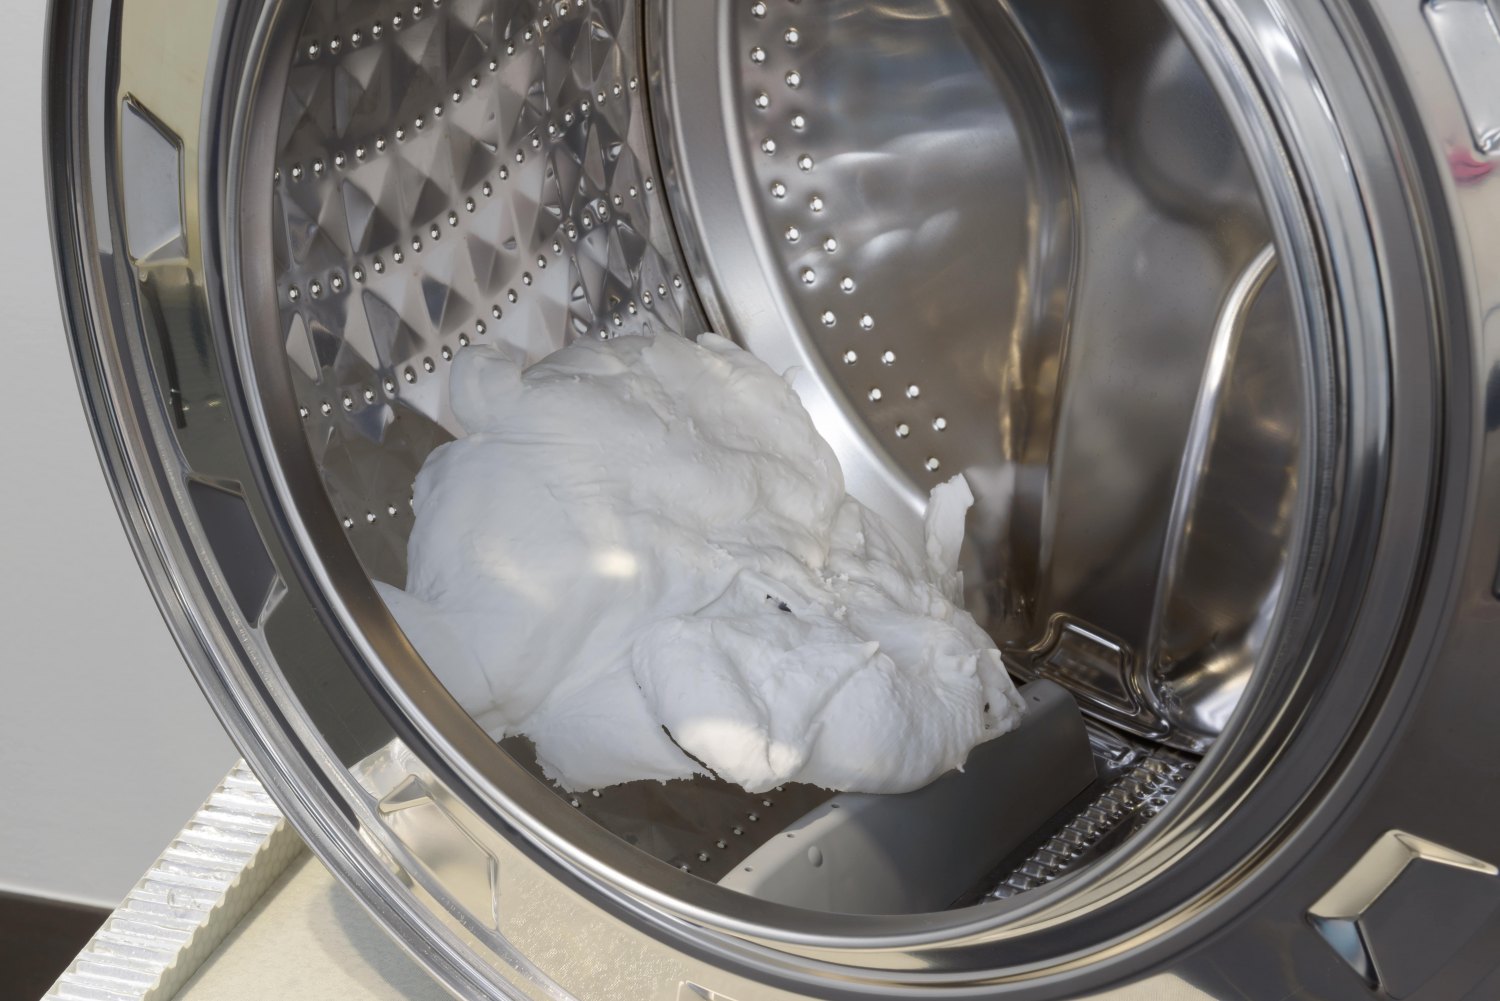 Yngve Holen  Sensitive 8 Detergent, 2017 washing machine drum, plastic, honeycomb panel, SLS print, 145 x 596 x 64.3 cm, Detail  